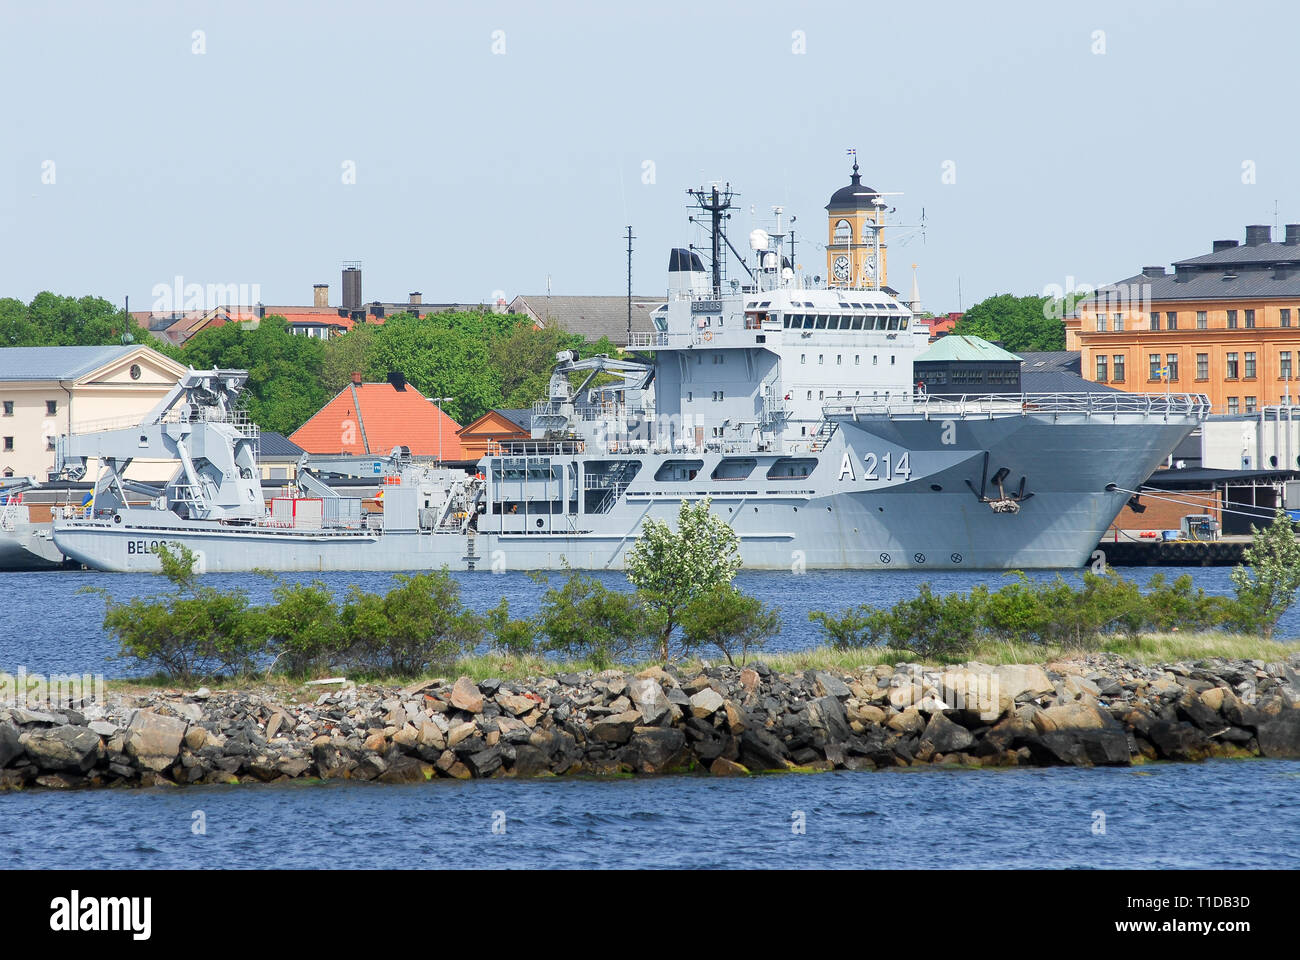 HSwMS Belos A214 submarine rescue ship in 1st Submarine flotilla of Swedish Navy in Karlskrona örlogsbas (Karlskrona naval base) listed World Heritage Stock Photo